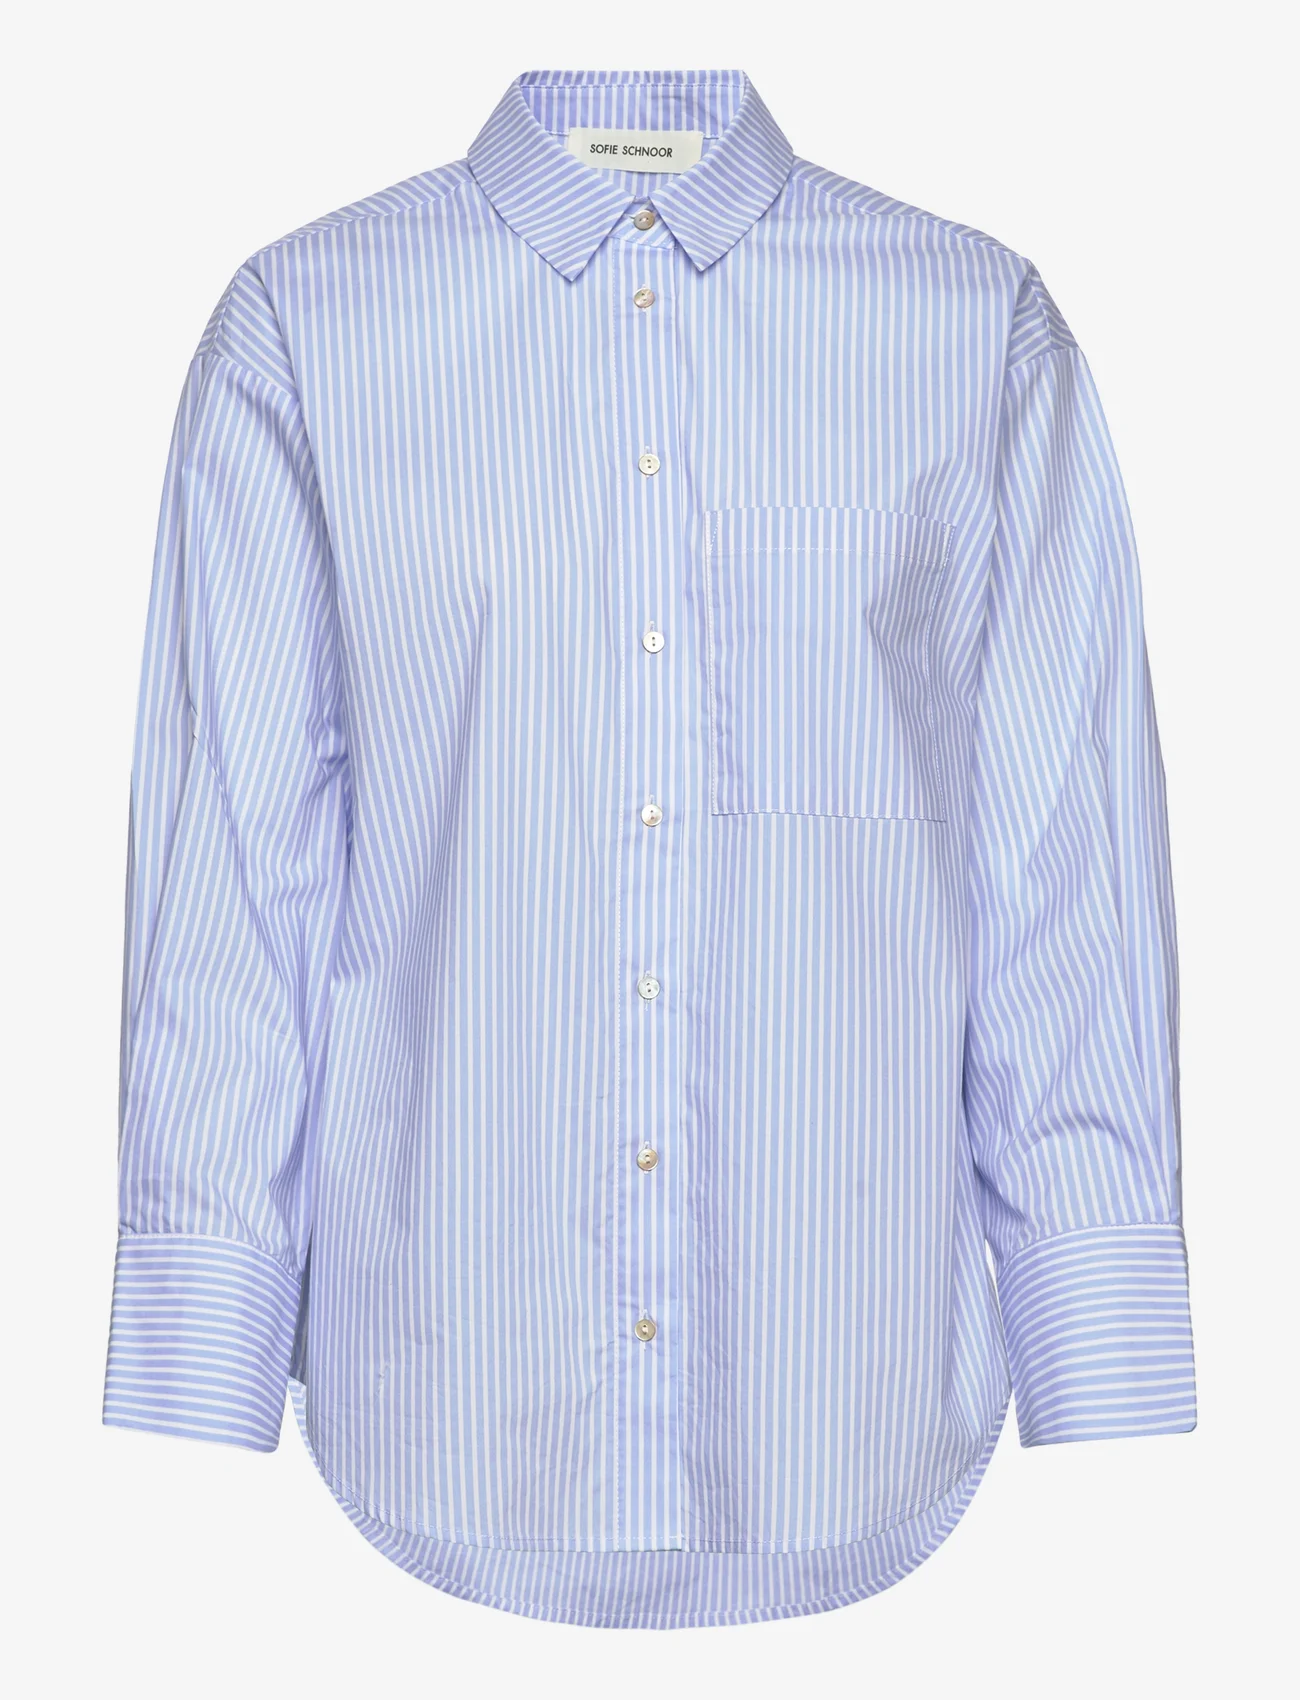 Sofie Schnoor - Shirt - long-sleeved shirts - light blue striped - 0